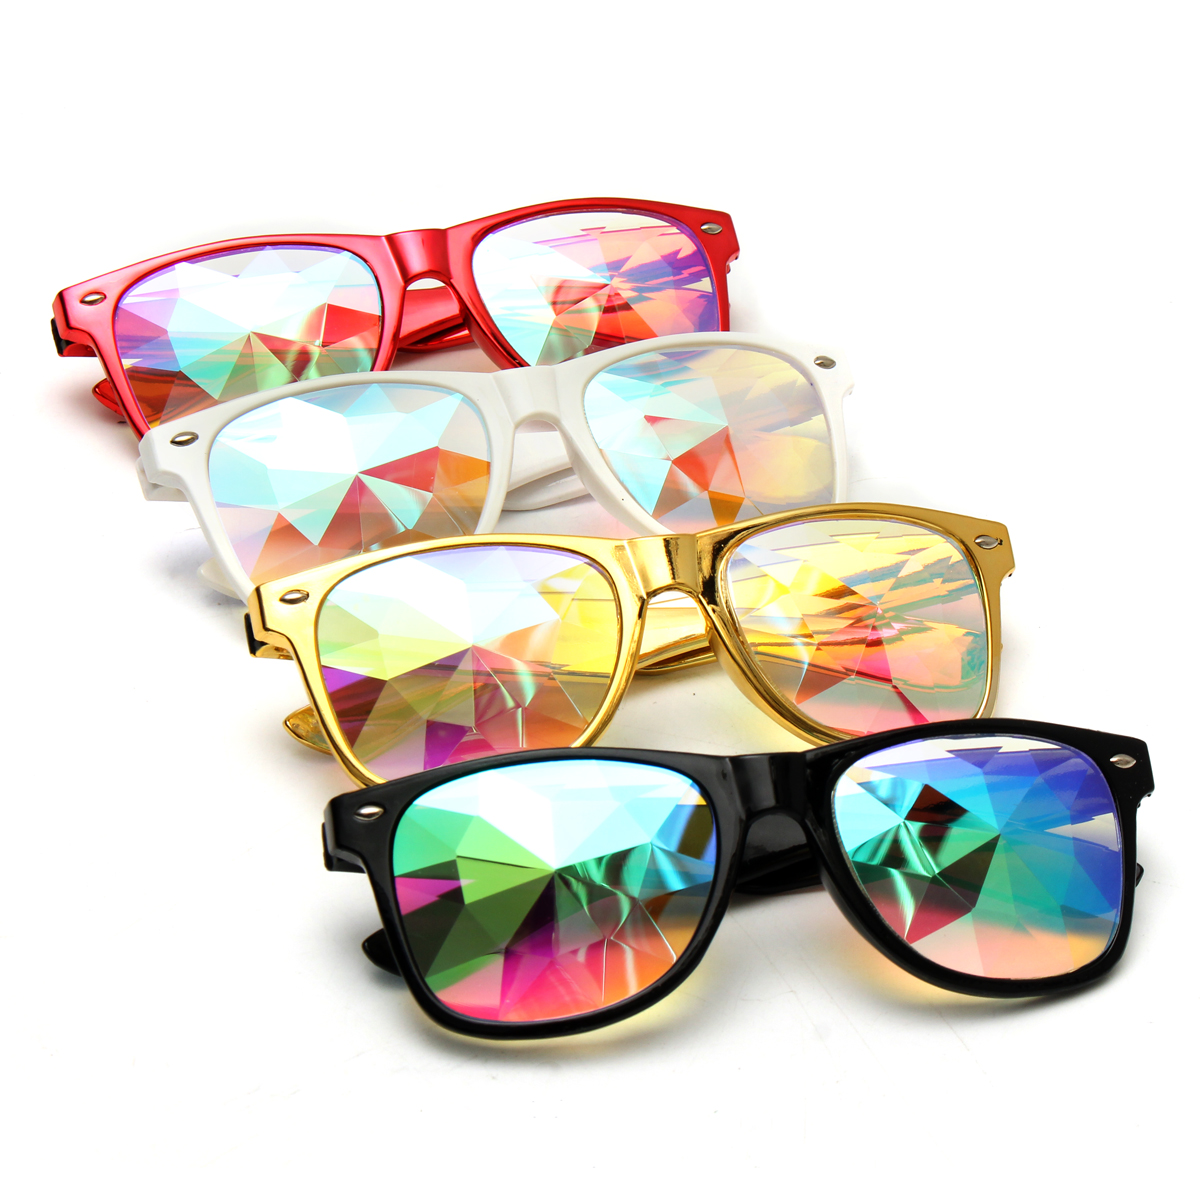 

Kaleidoscope Steampunk Rave Glasses Diffraction Rainbow Crystal Glasses